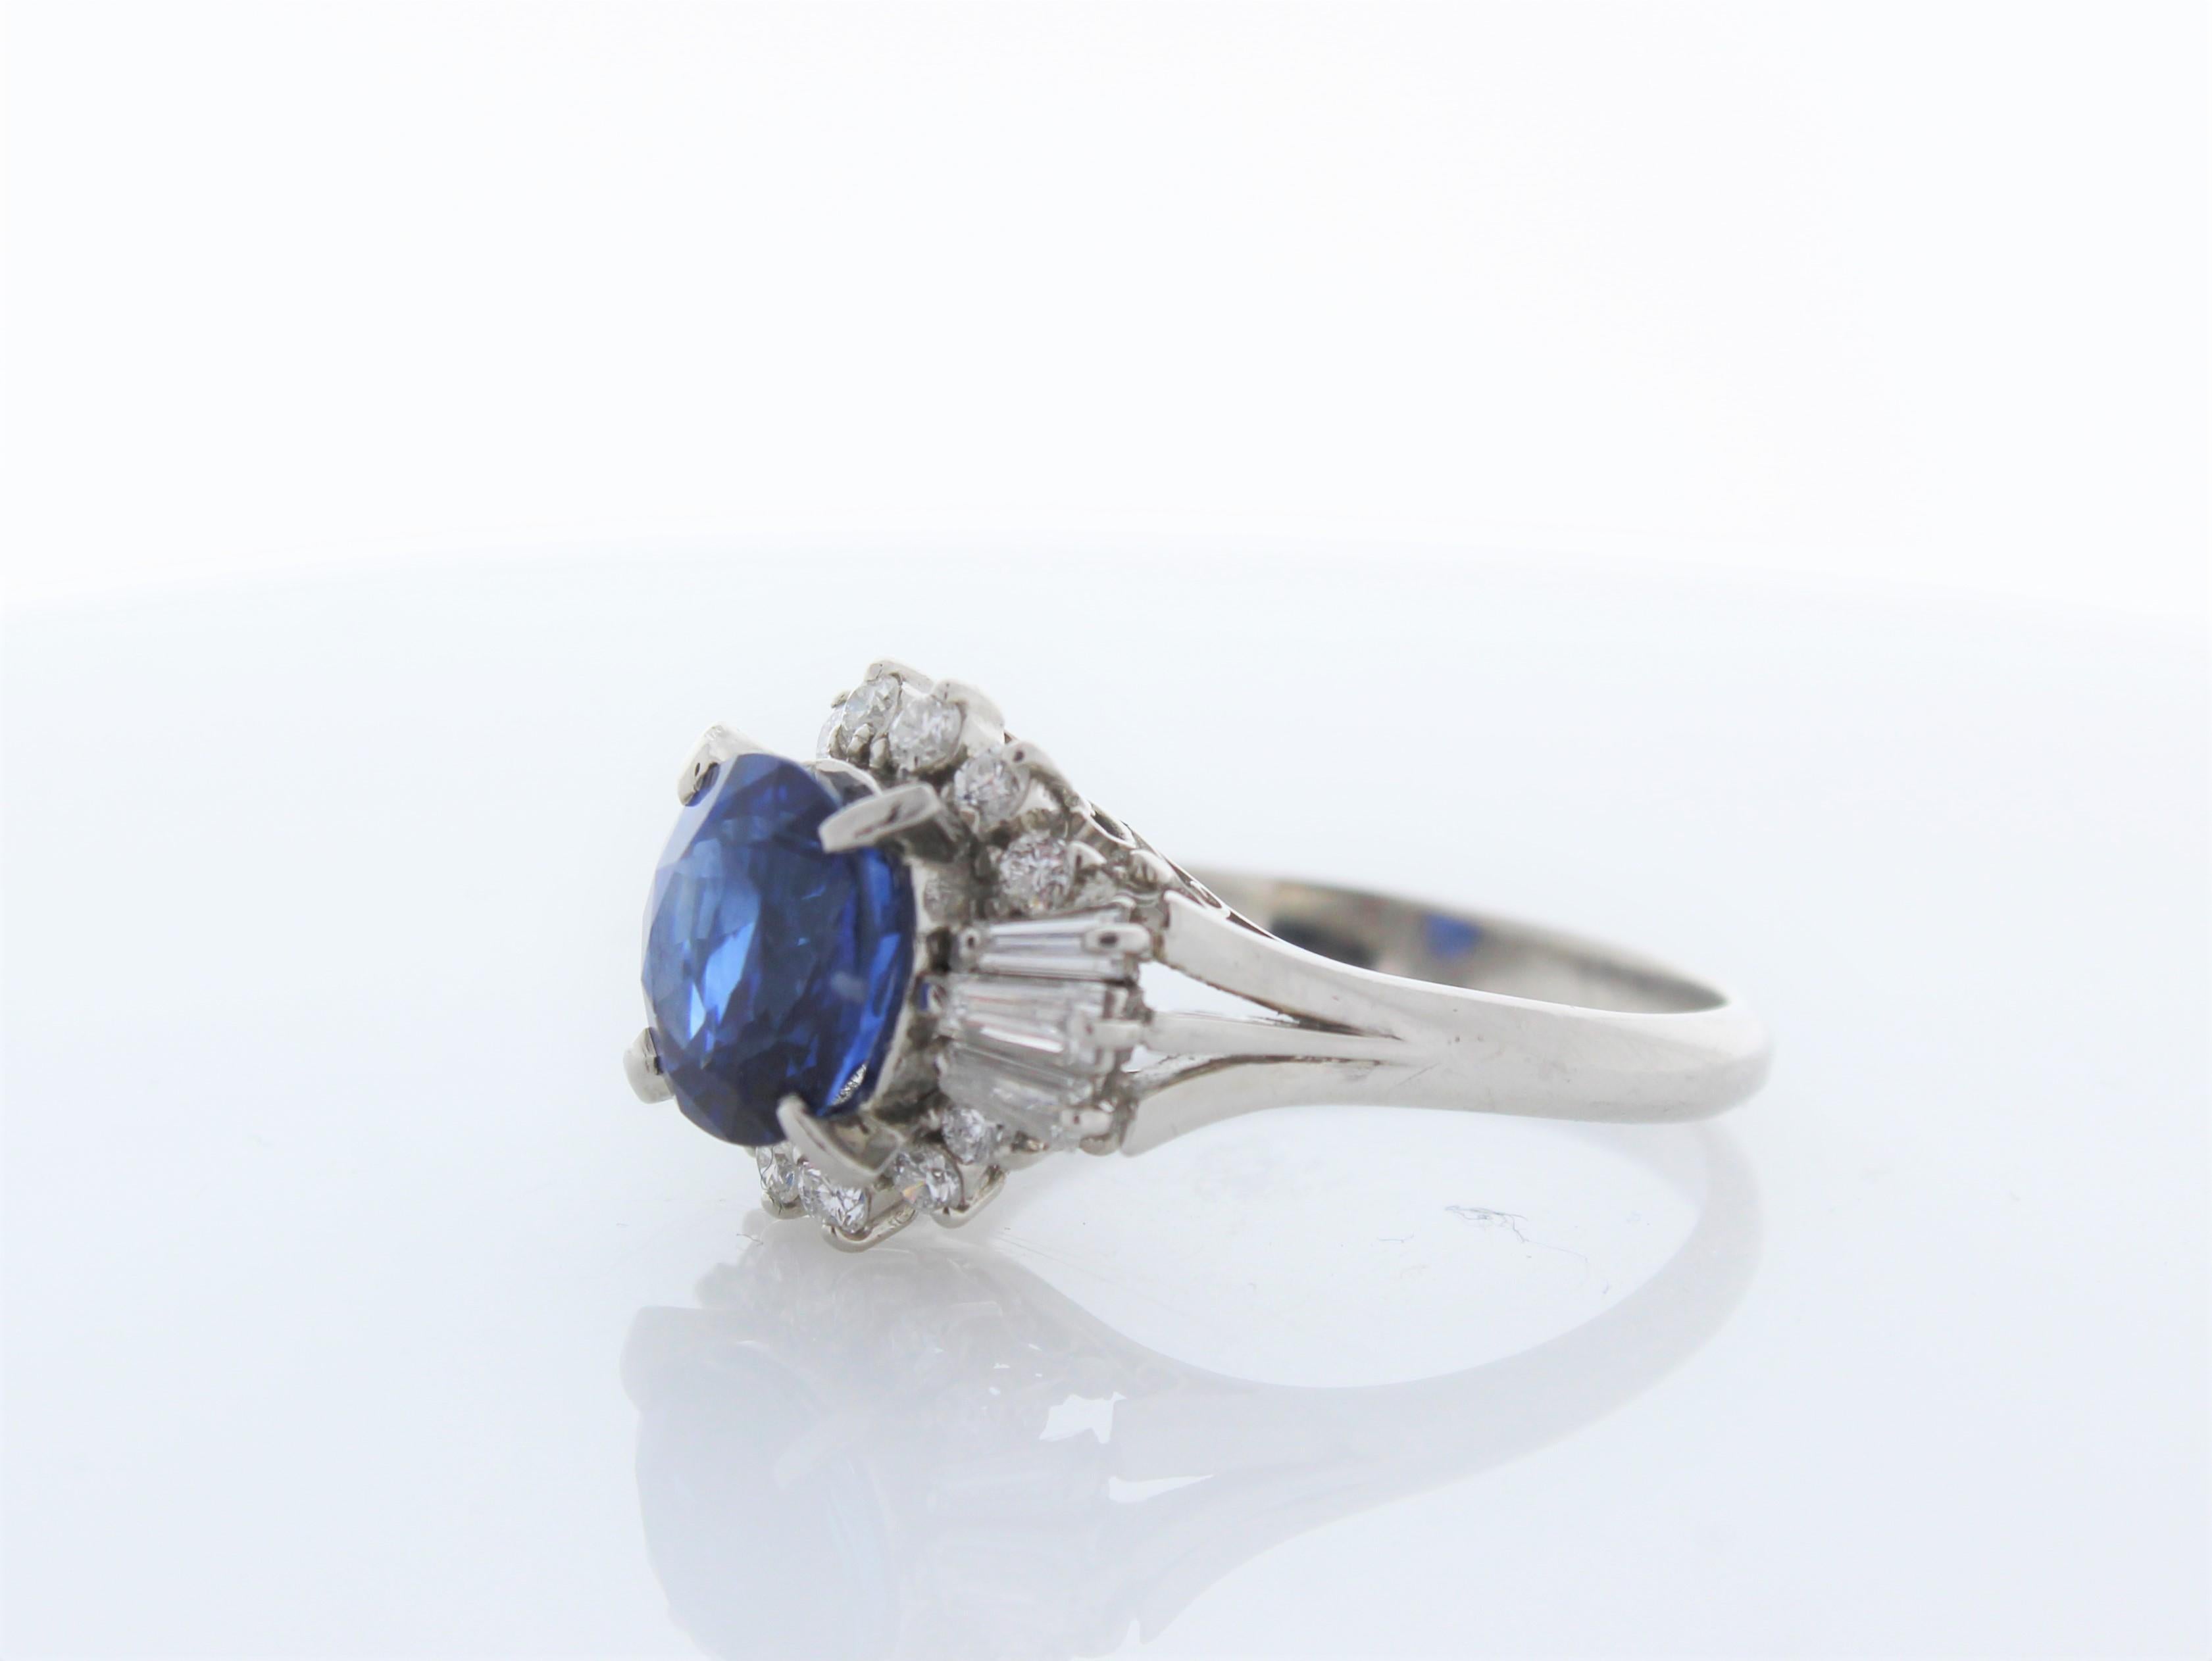 Cushion Cut 2.72 Carat Round Blue Sapphire and Diamond Ring in Platinum